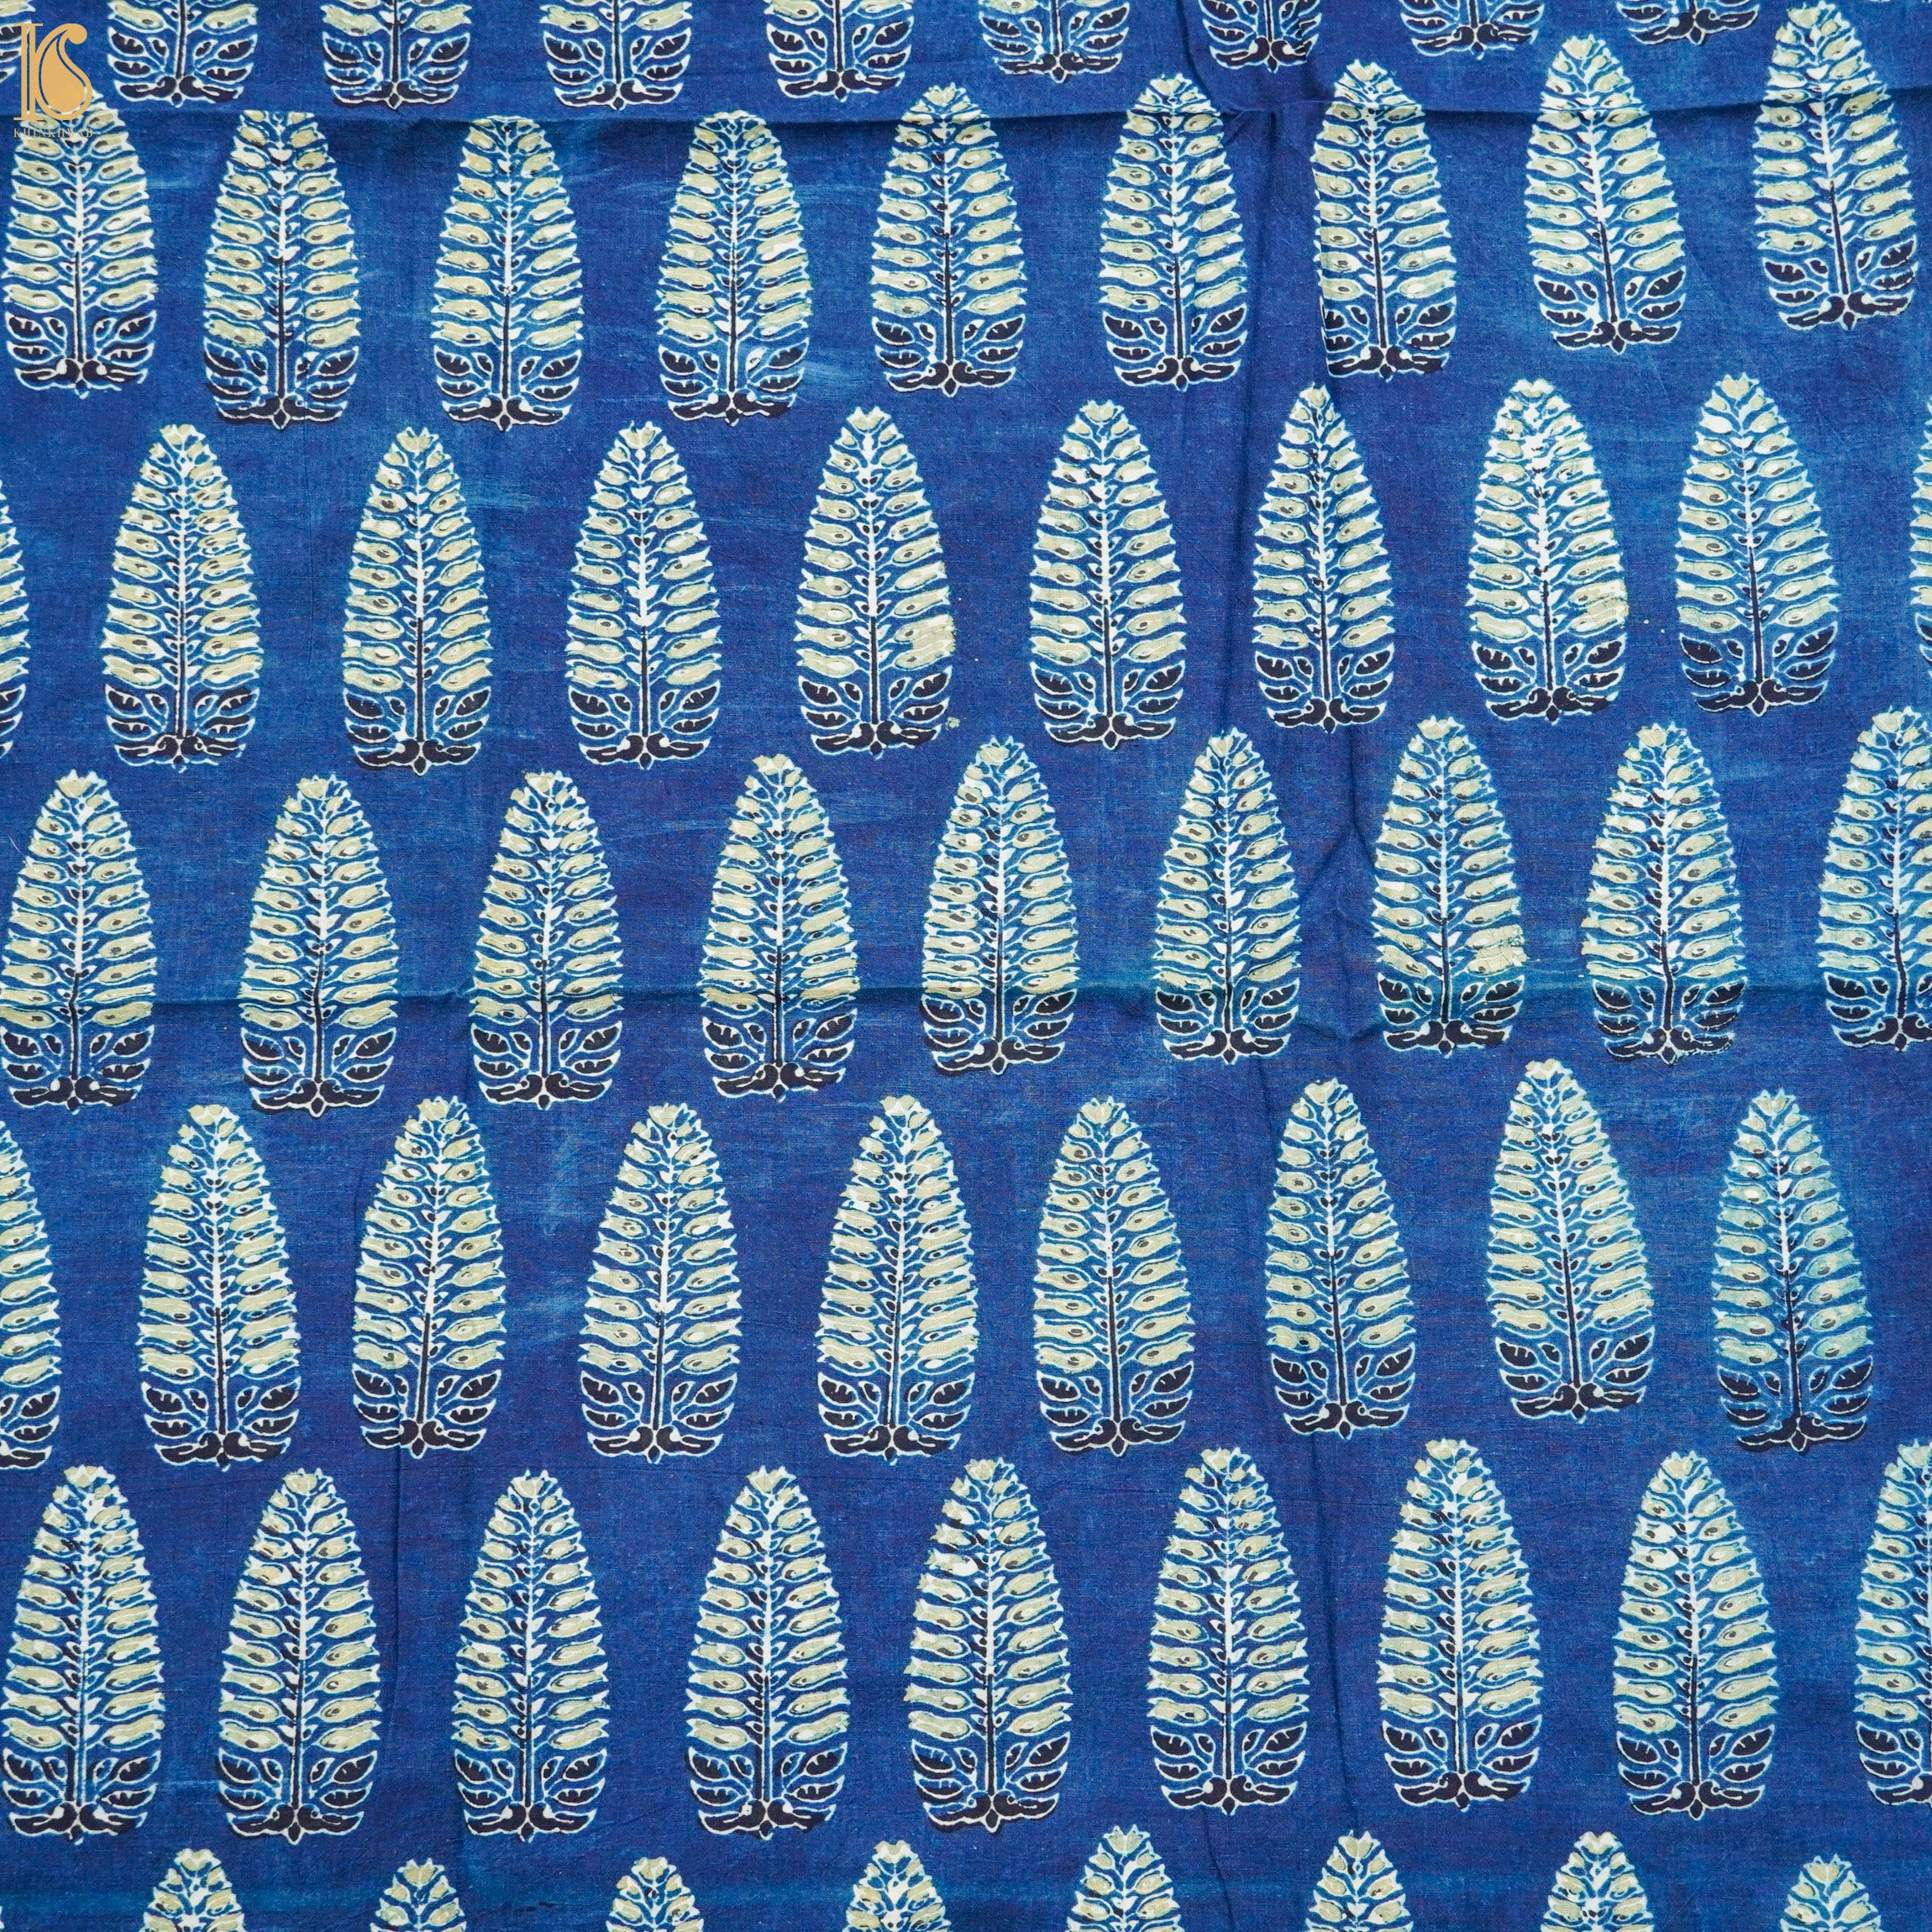 Blue Hand Block Ajrakh Cotton Leaf Fabric - Khinkhwab